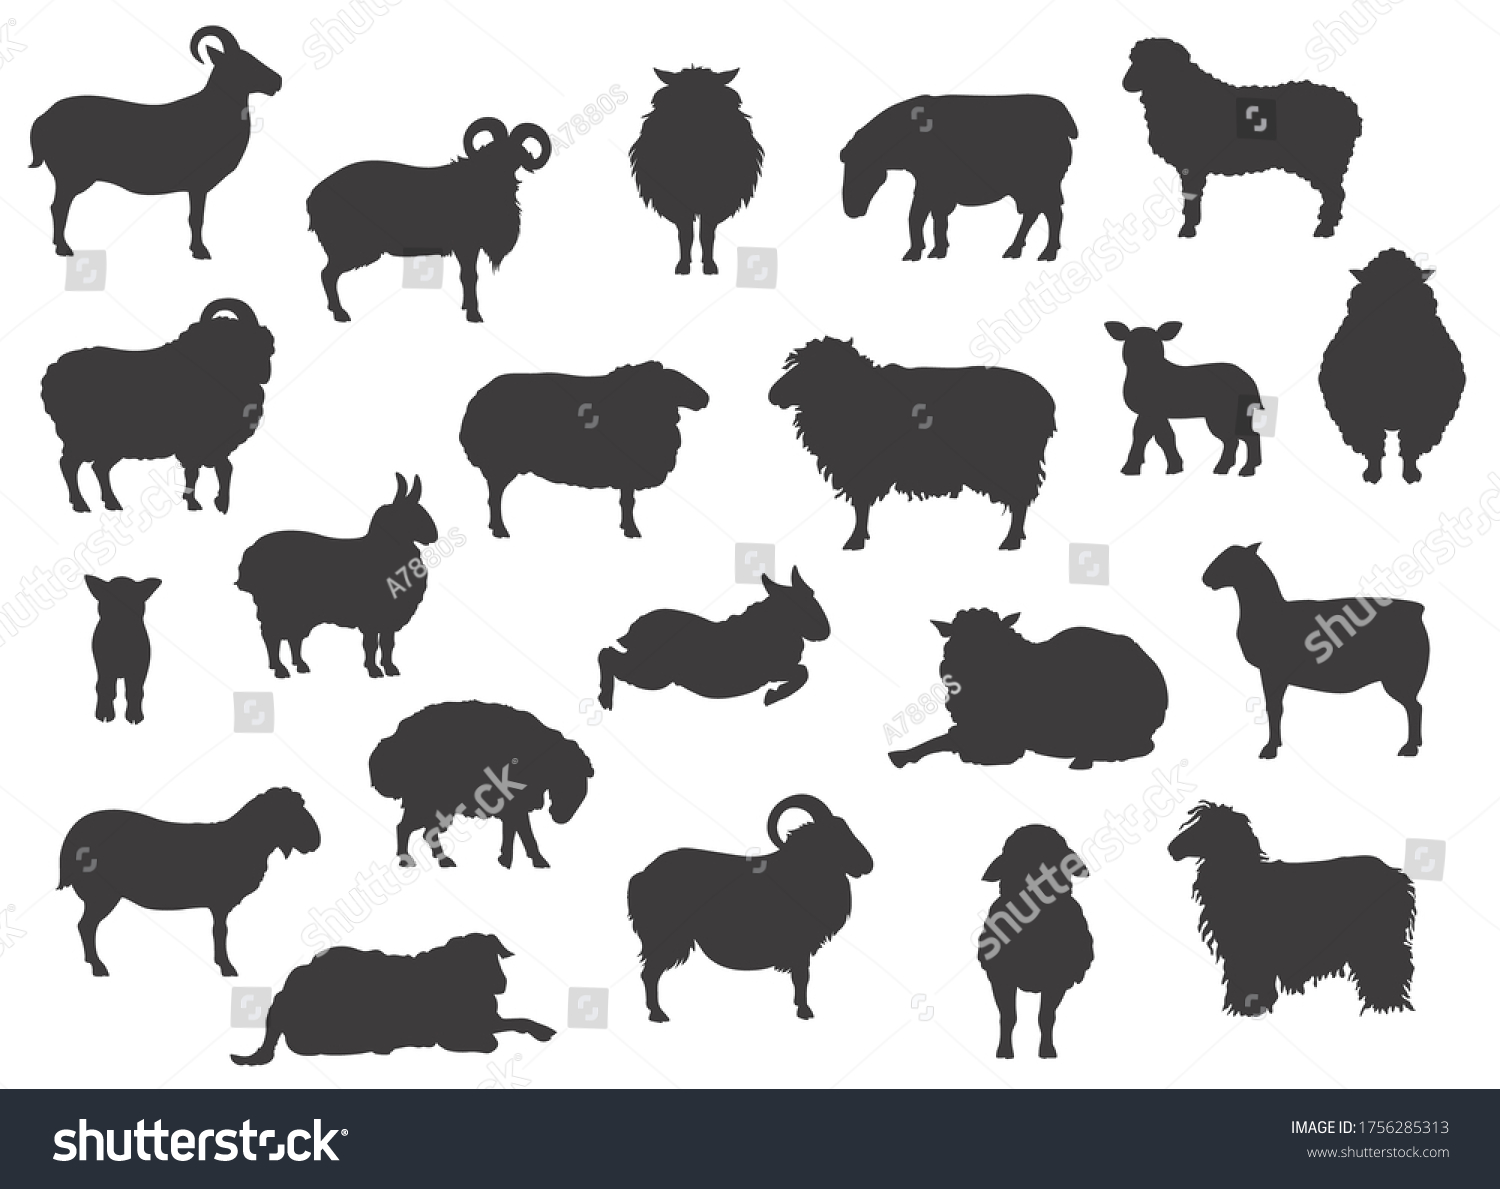 SVG of Sheep breeds black silhouettes collection. Farm animals set. Flat design. Vector illustration svg